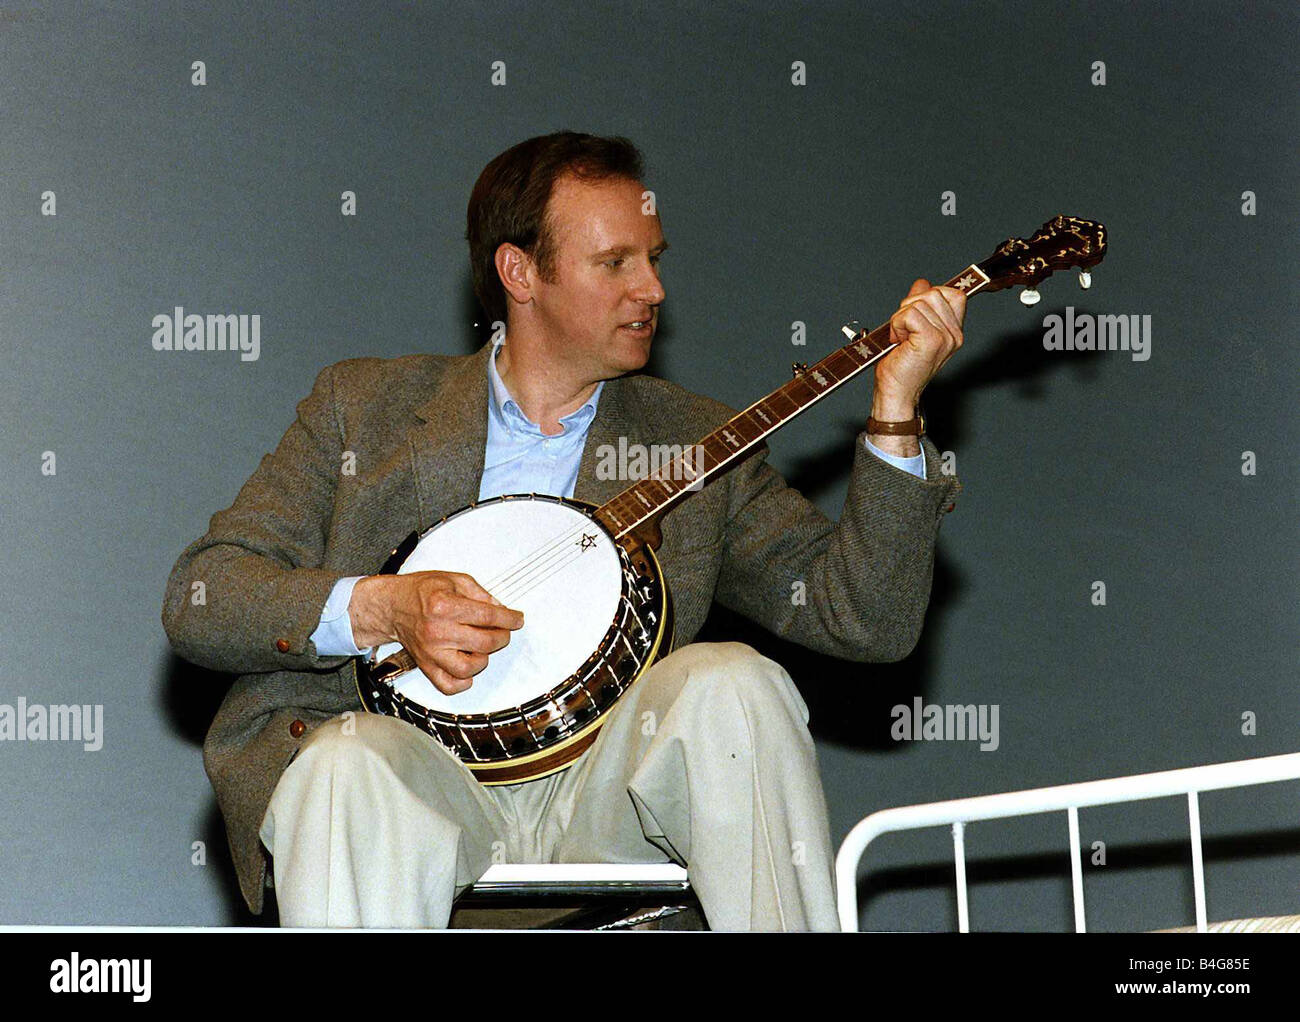 Peter Davison Actor playing a banjo Stock Photo - Alamy